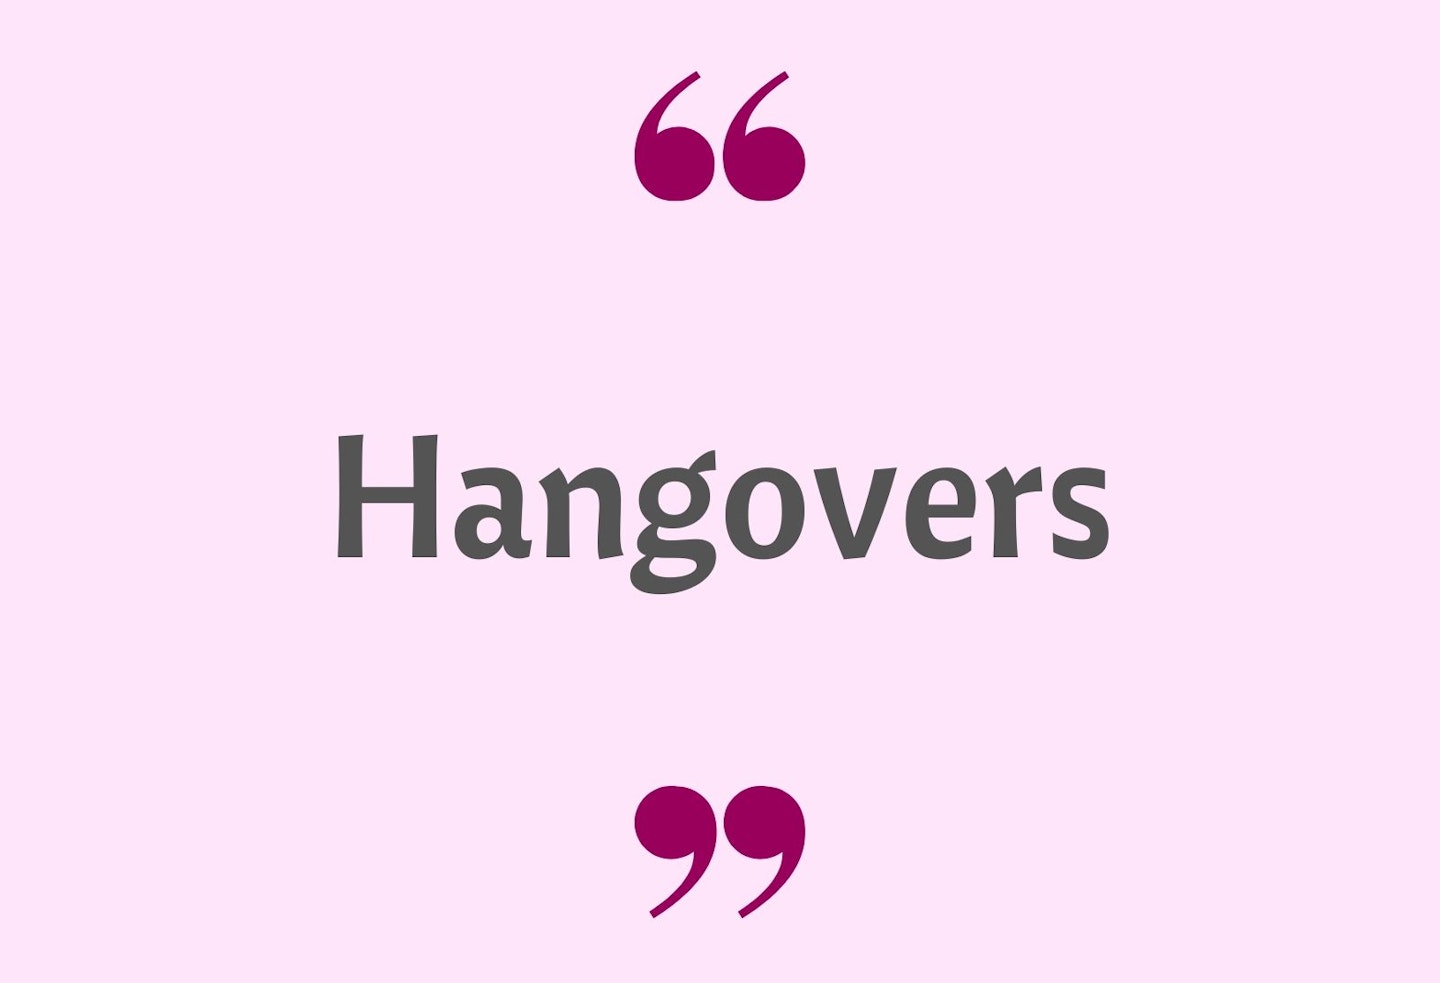 29) Hangovers